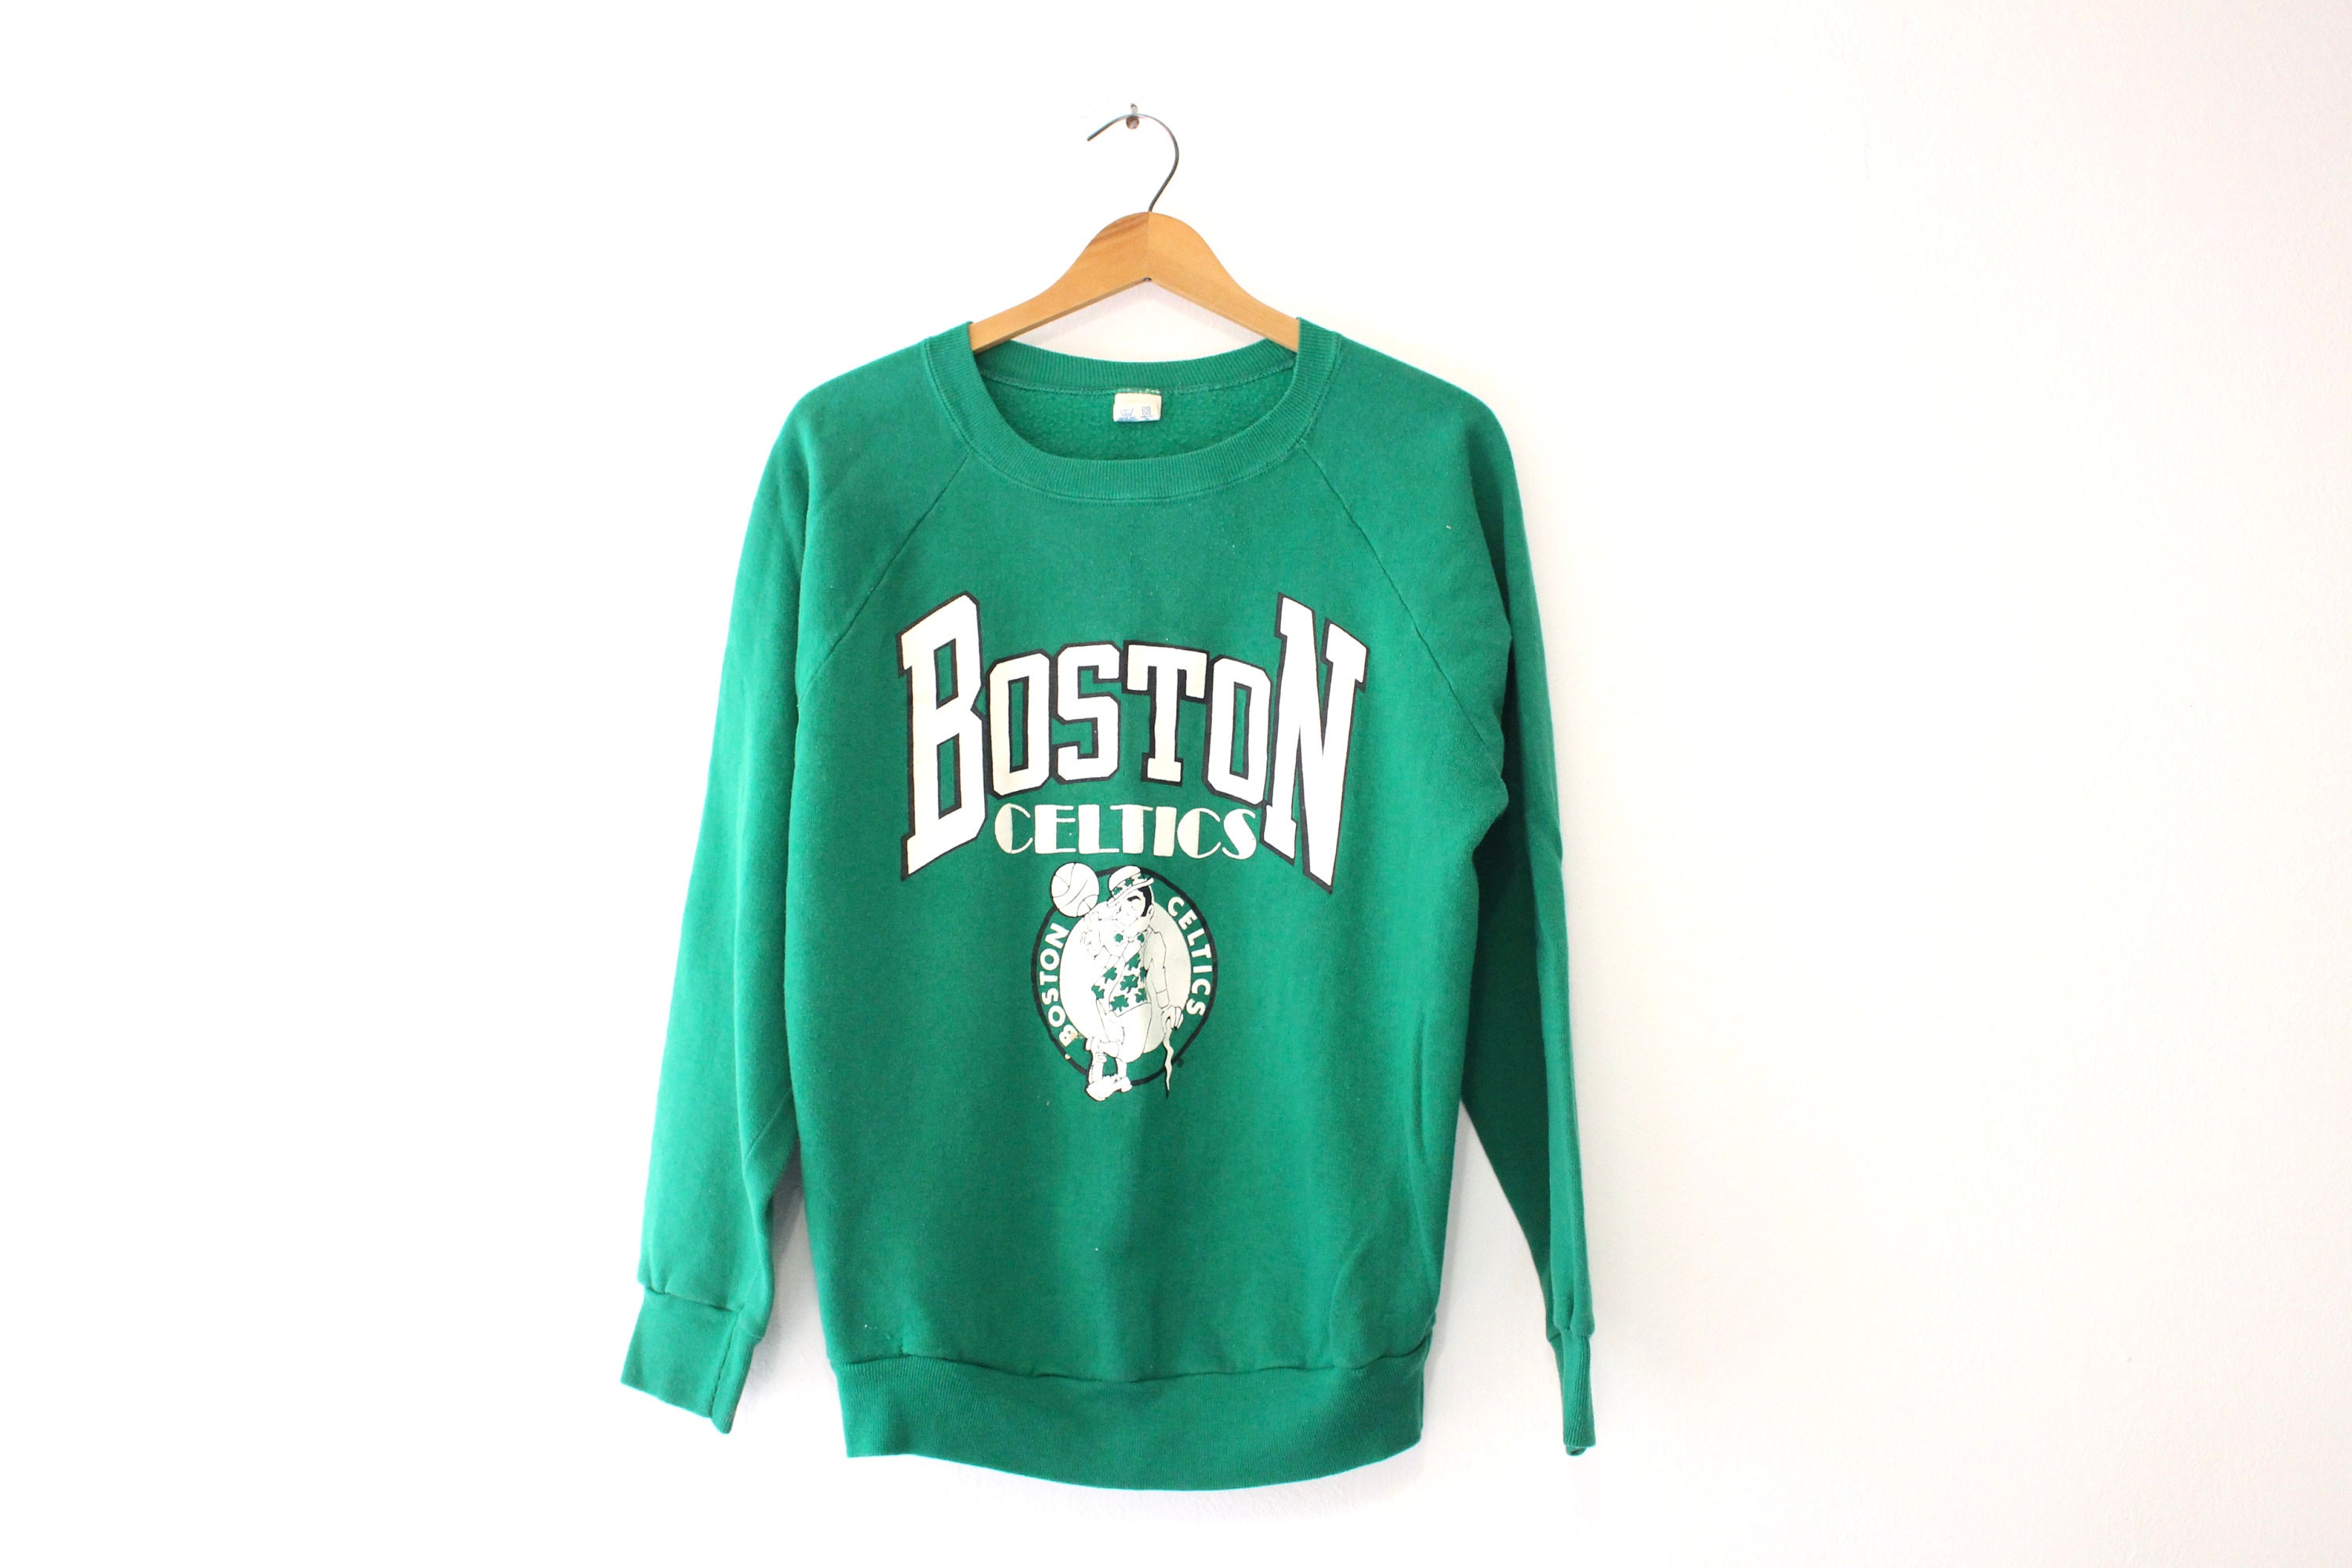 Logo Boston Celtics 1986 Nba Champions Shirt, hoodie, longsleeve